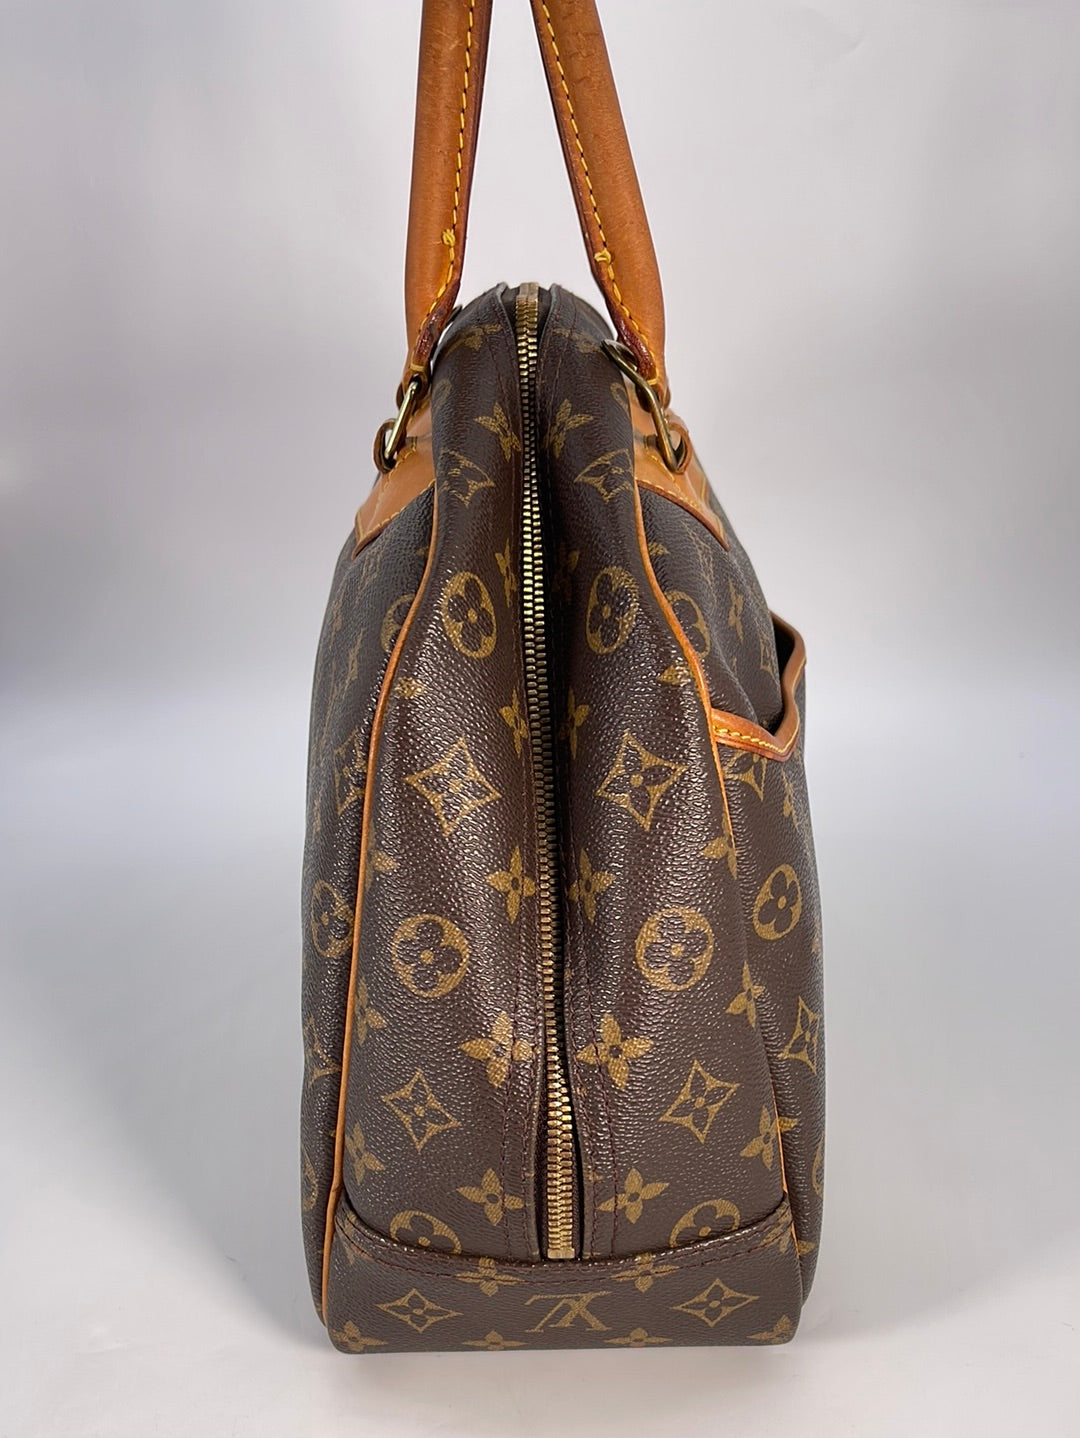 Authentic Louis Vuitton Monogram Deauville Hand Bag Purse Preowned